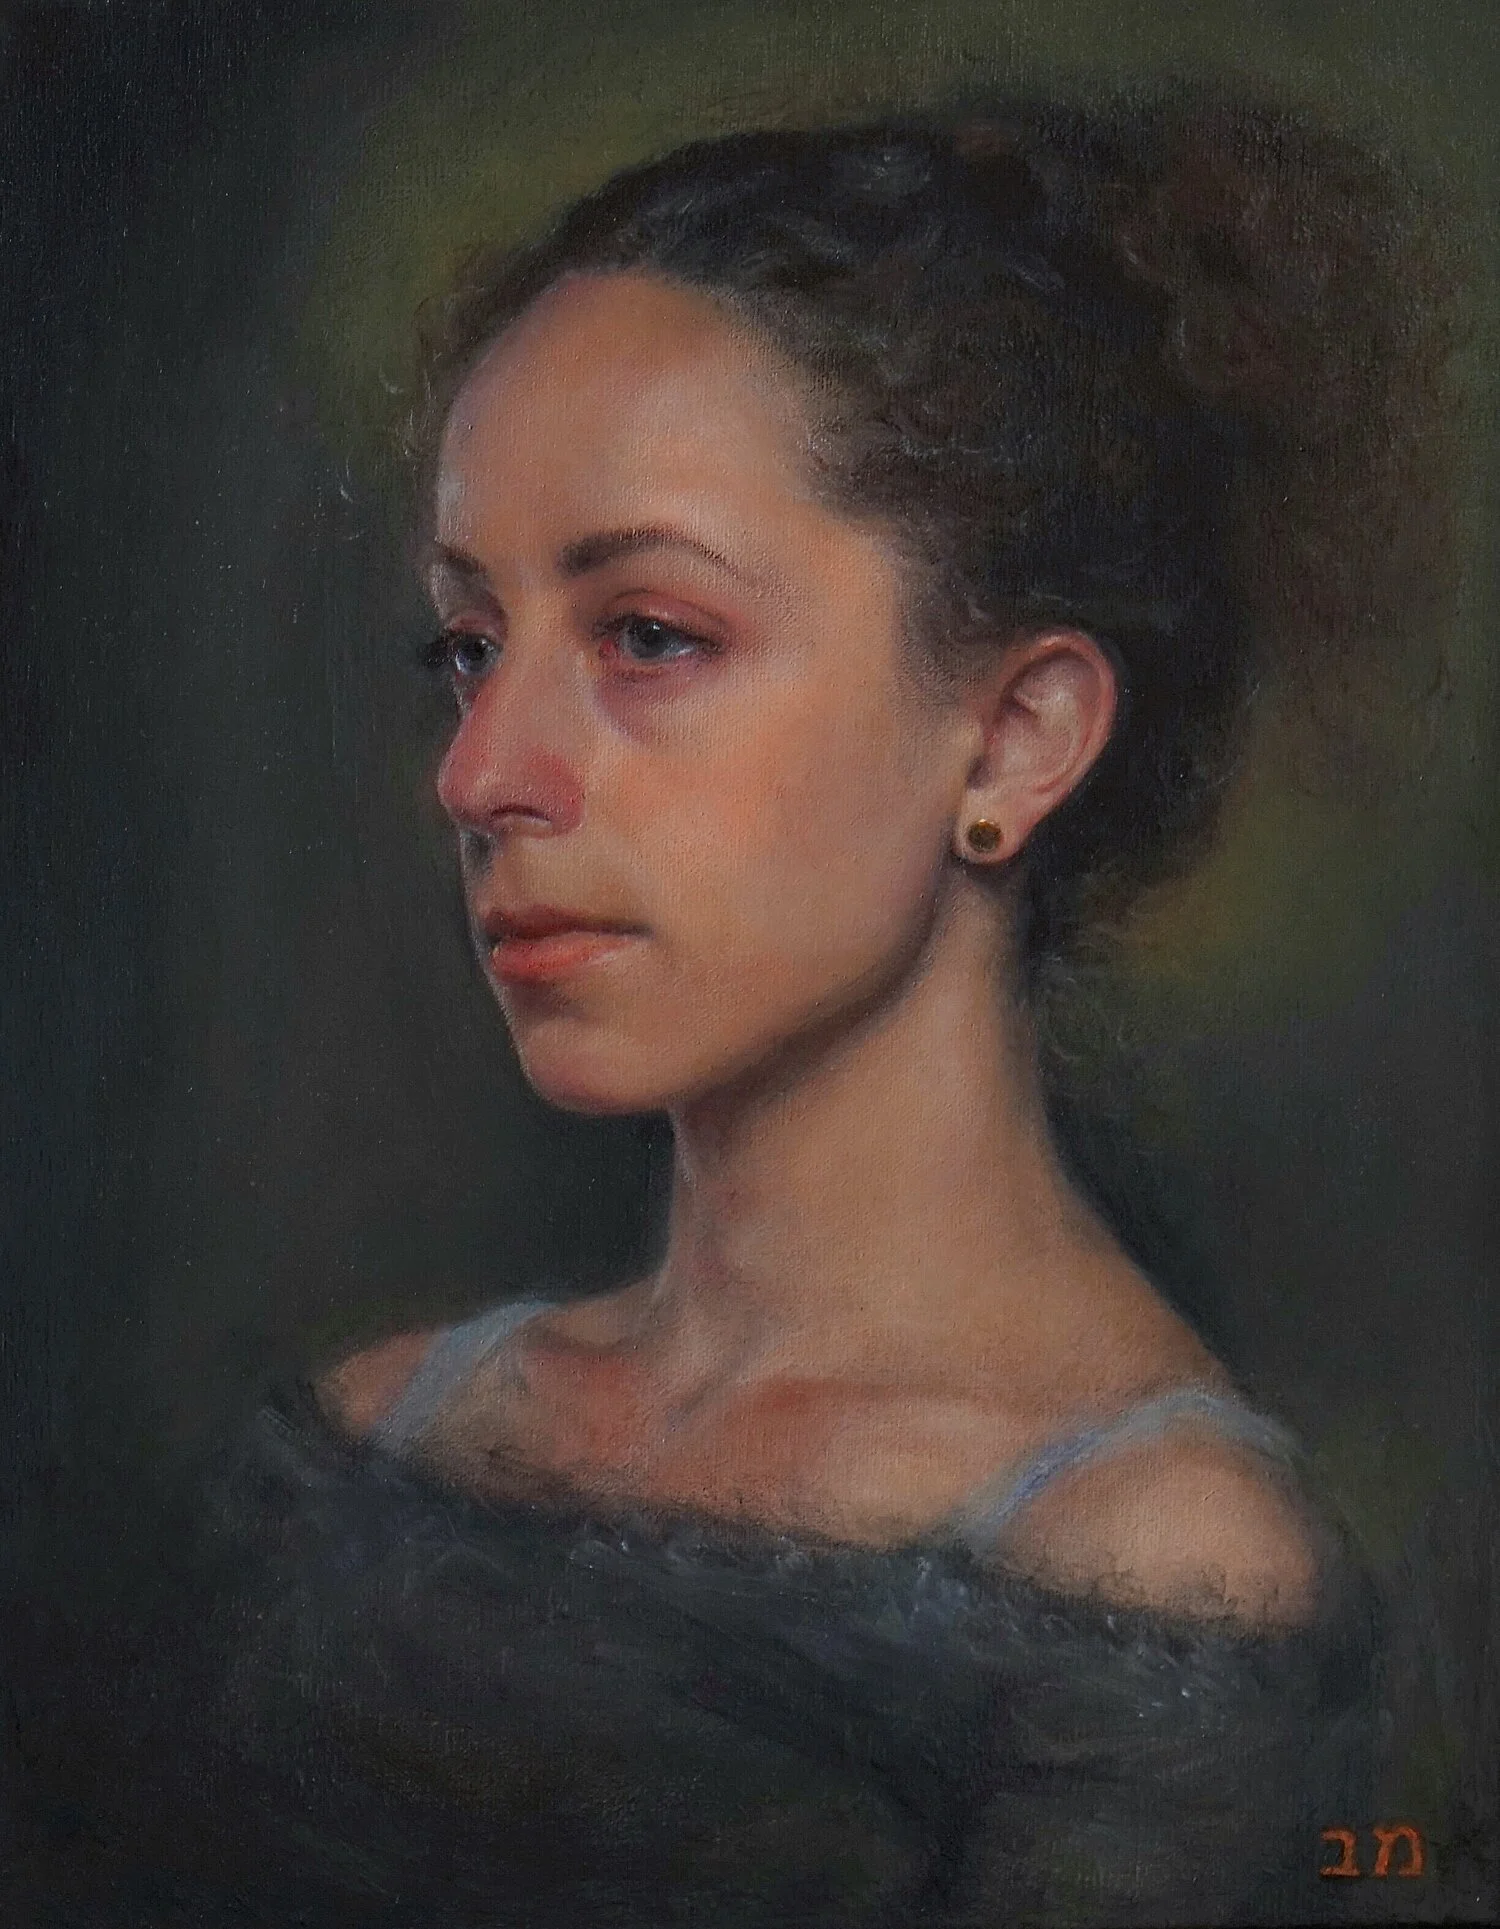 Miriam Baranov - Portraiture and Figurative Realism Artist